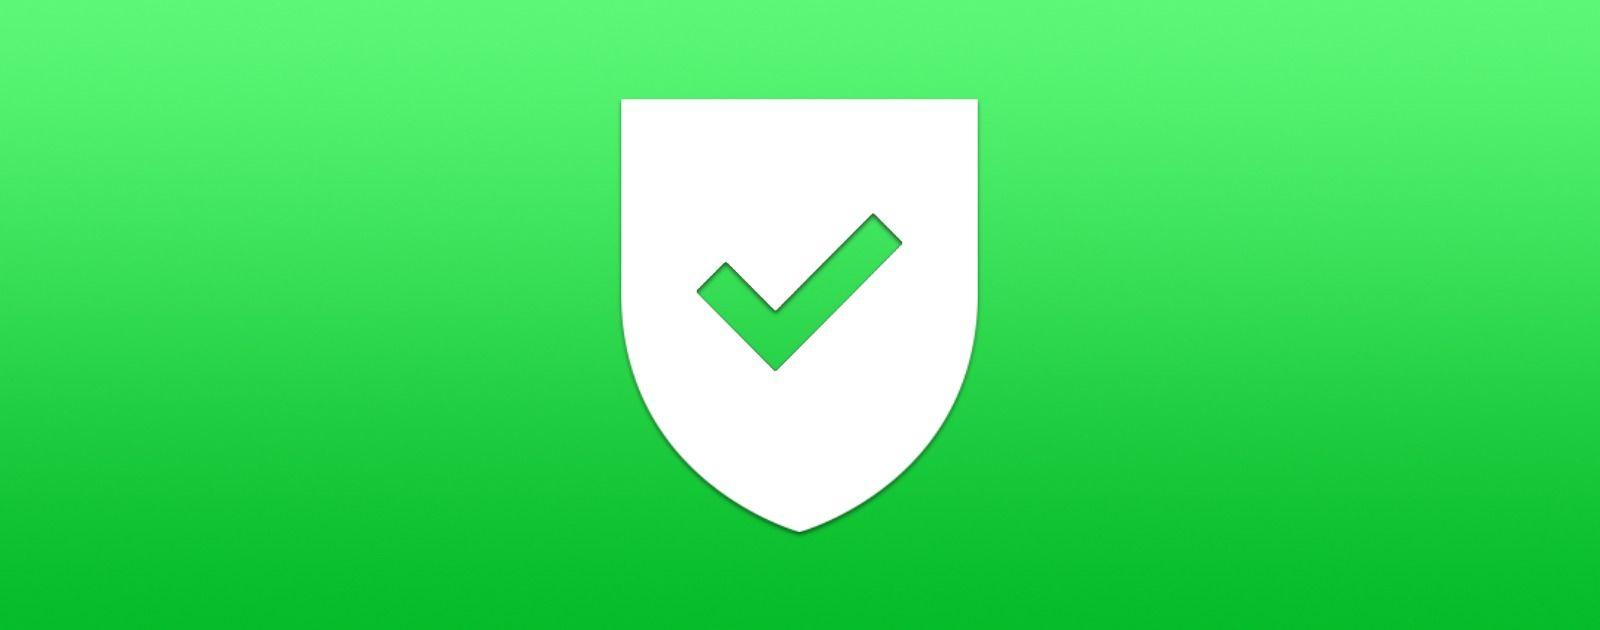 Antivirus App Logo - Here's Why You Don't Need an iOS Antivirus App - The Mac Observer